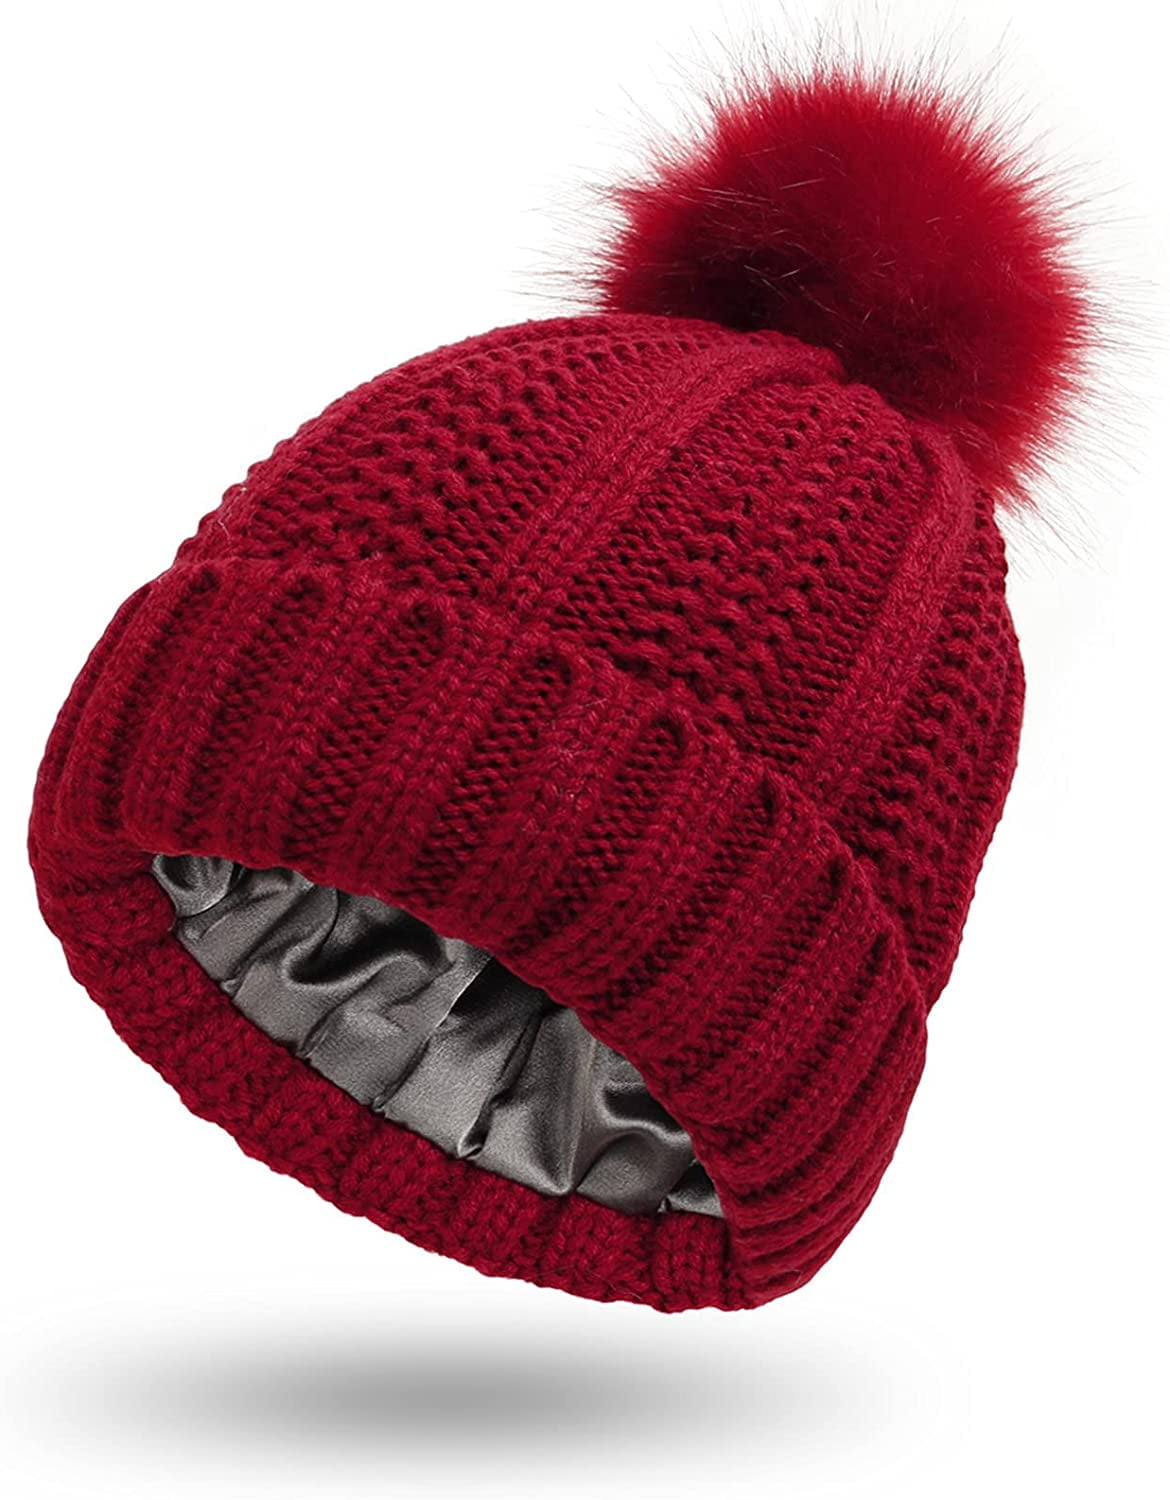 Fly Fishing Unisex Warm Winter Hat Knit Beanie Skull Cap Cuff Beanie Hat Winter Hats